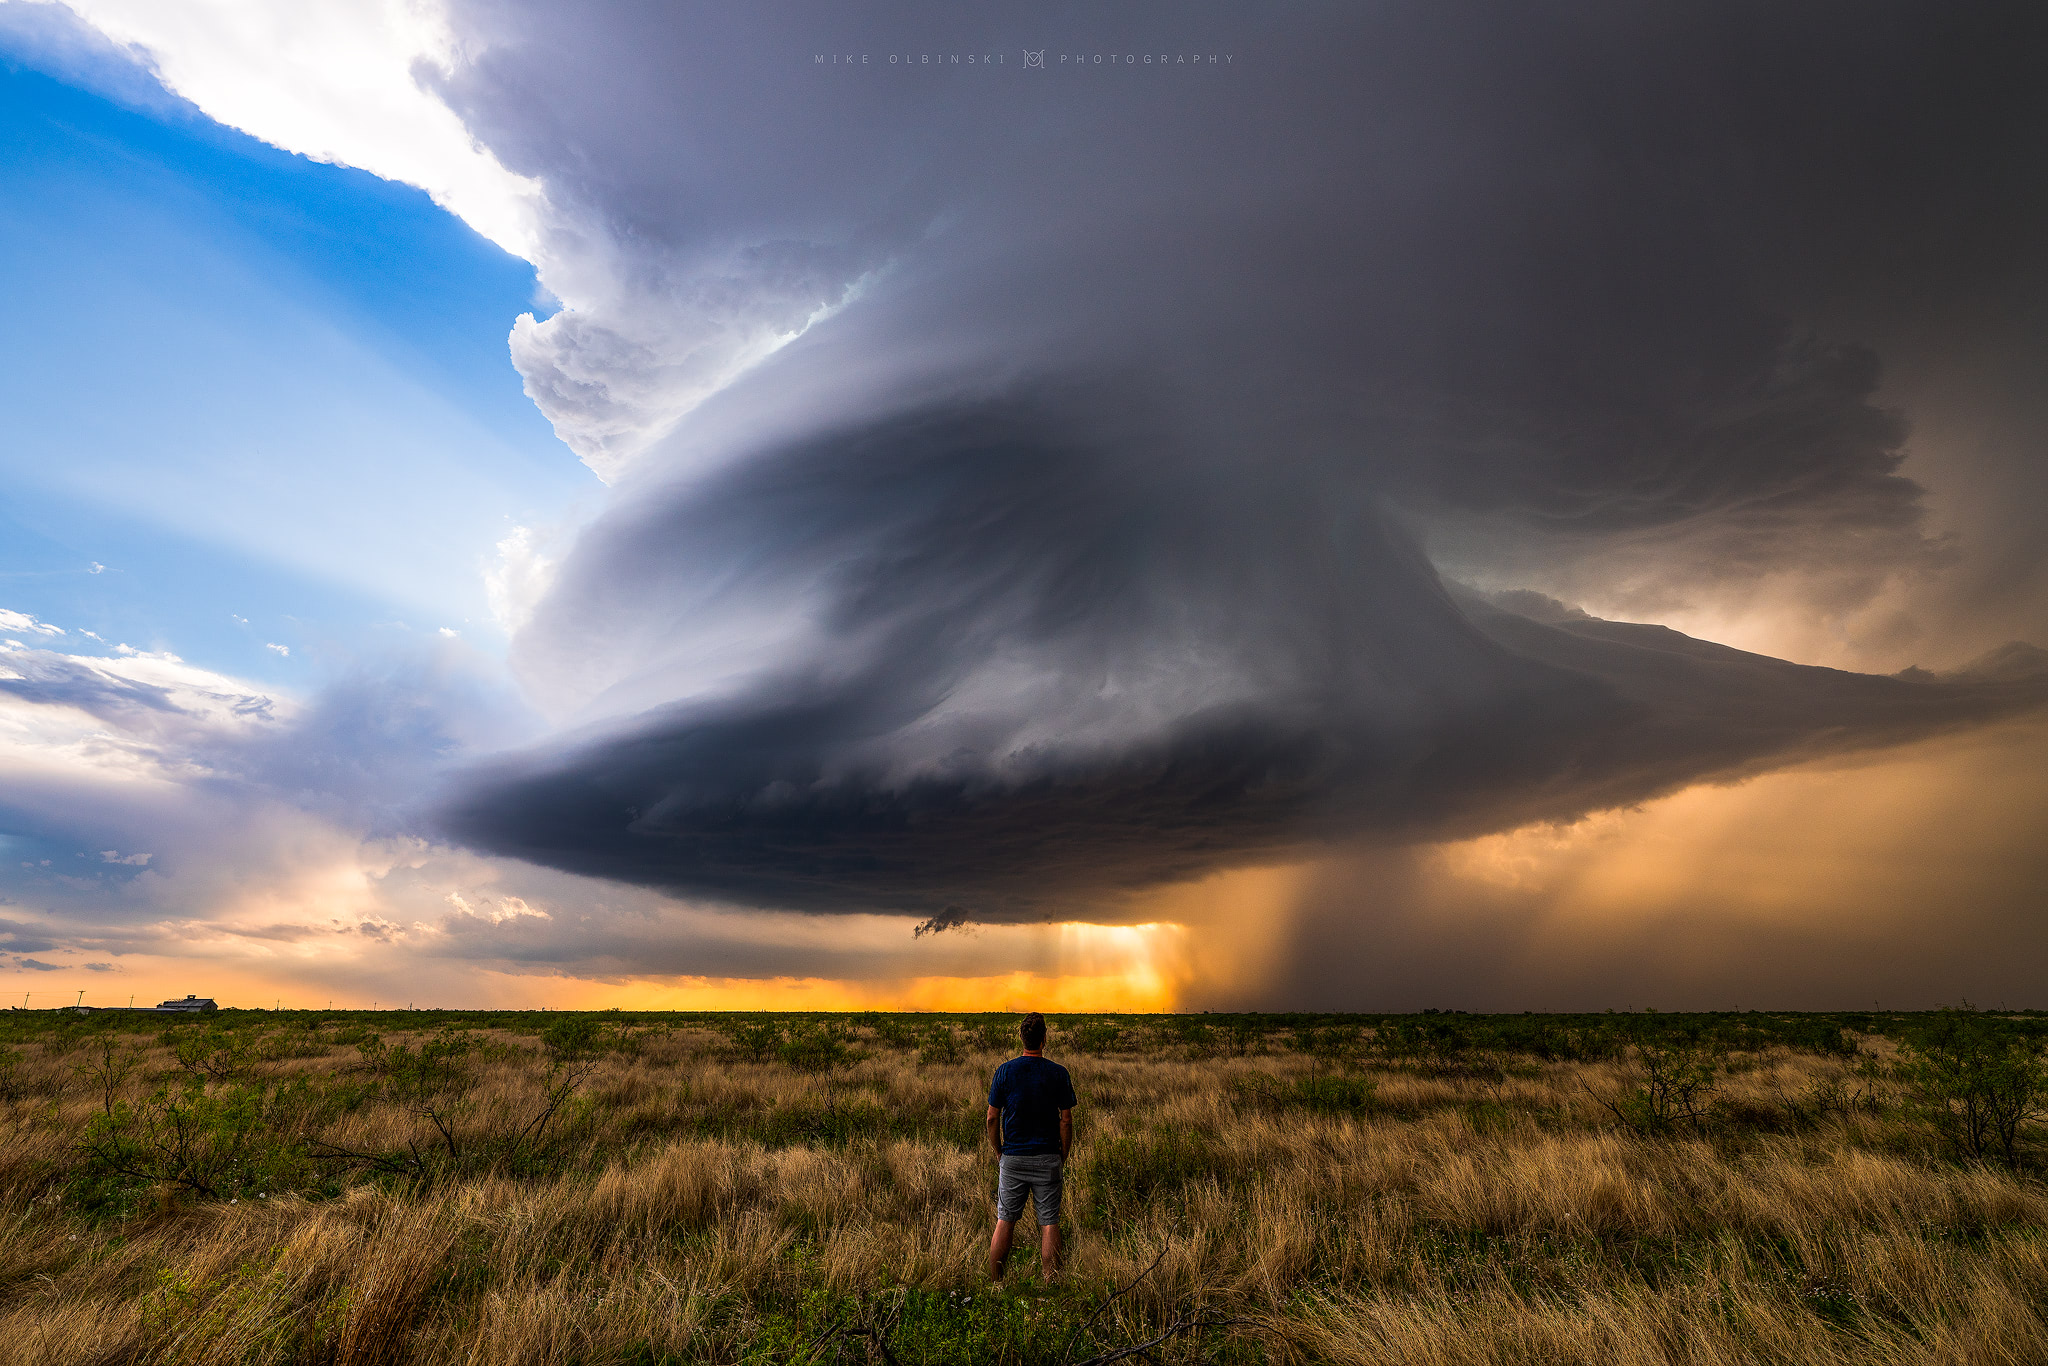 I am Mike Olbinski, Storm-Chasing Photographer